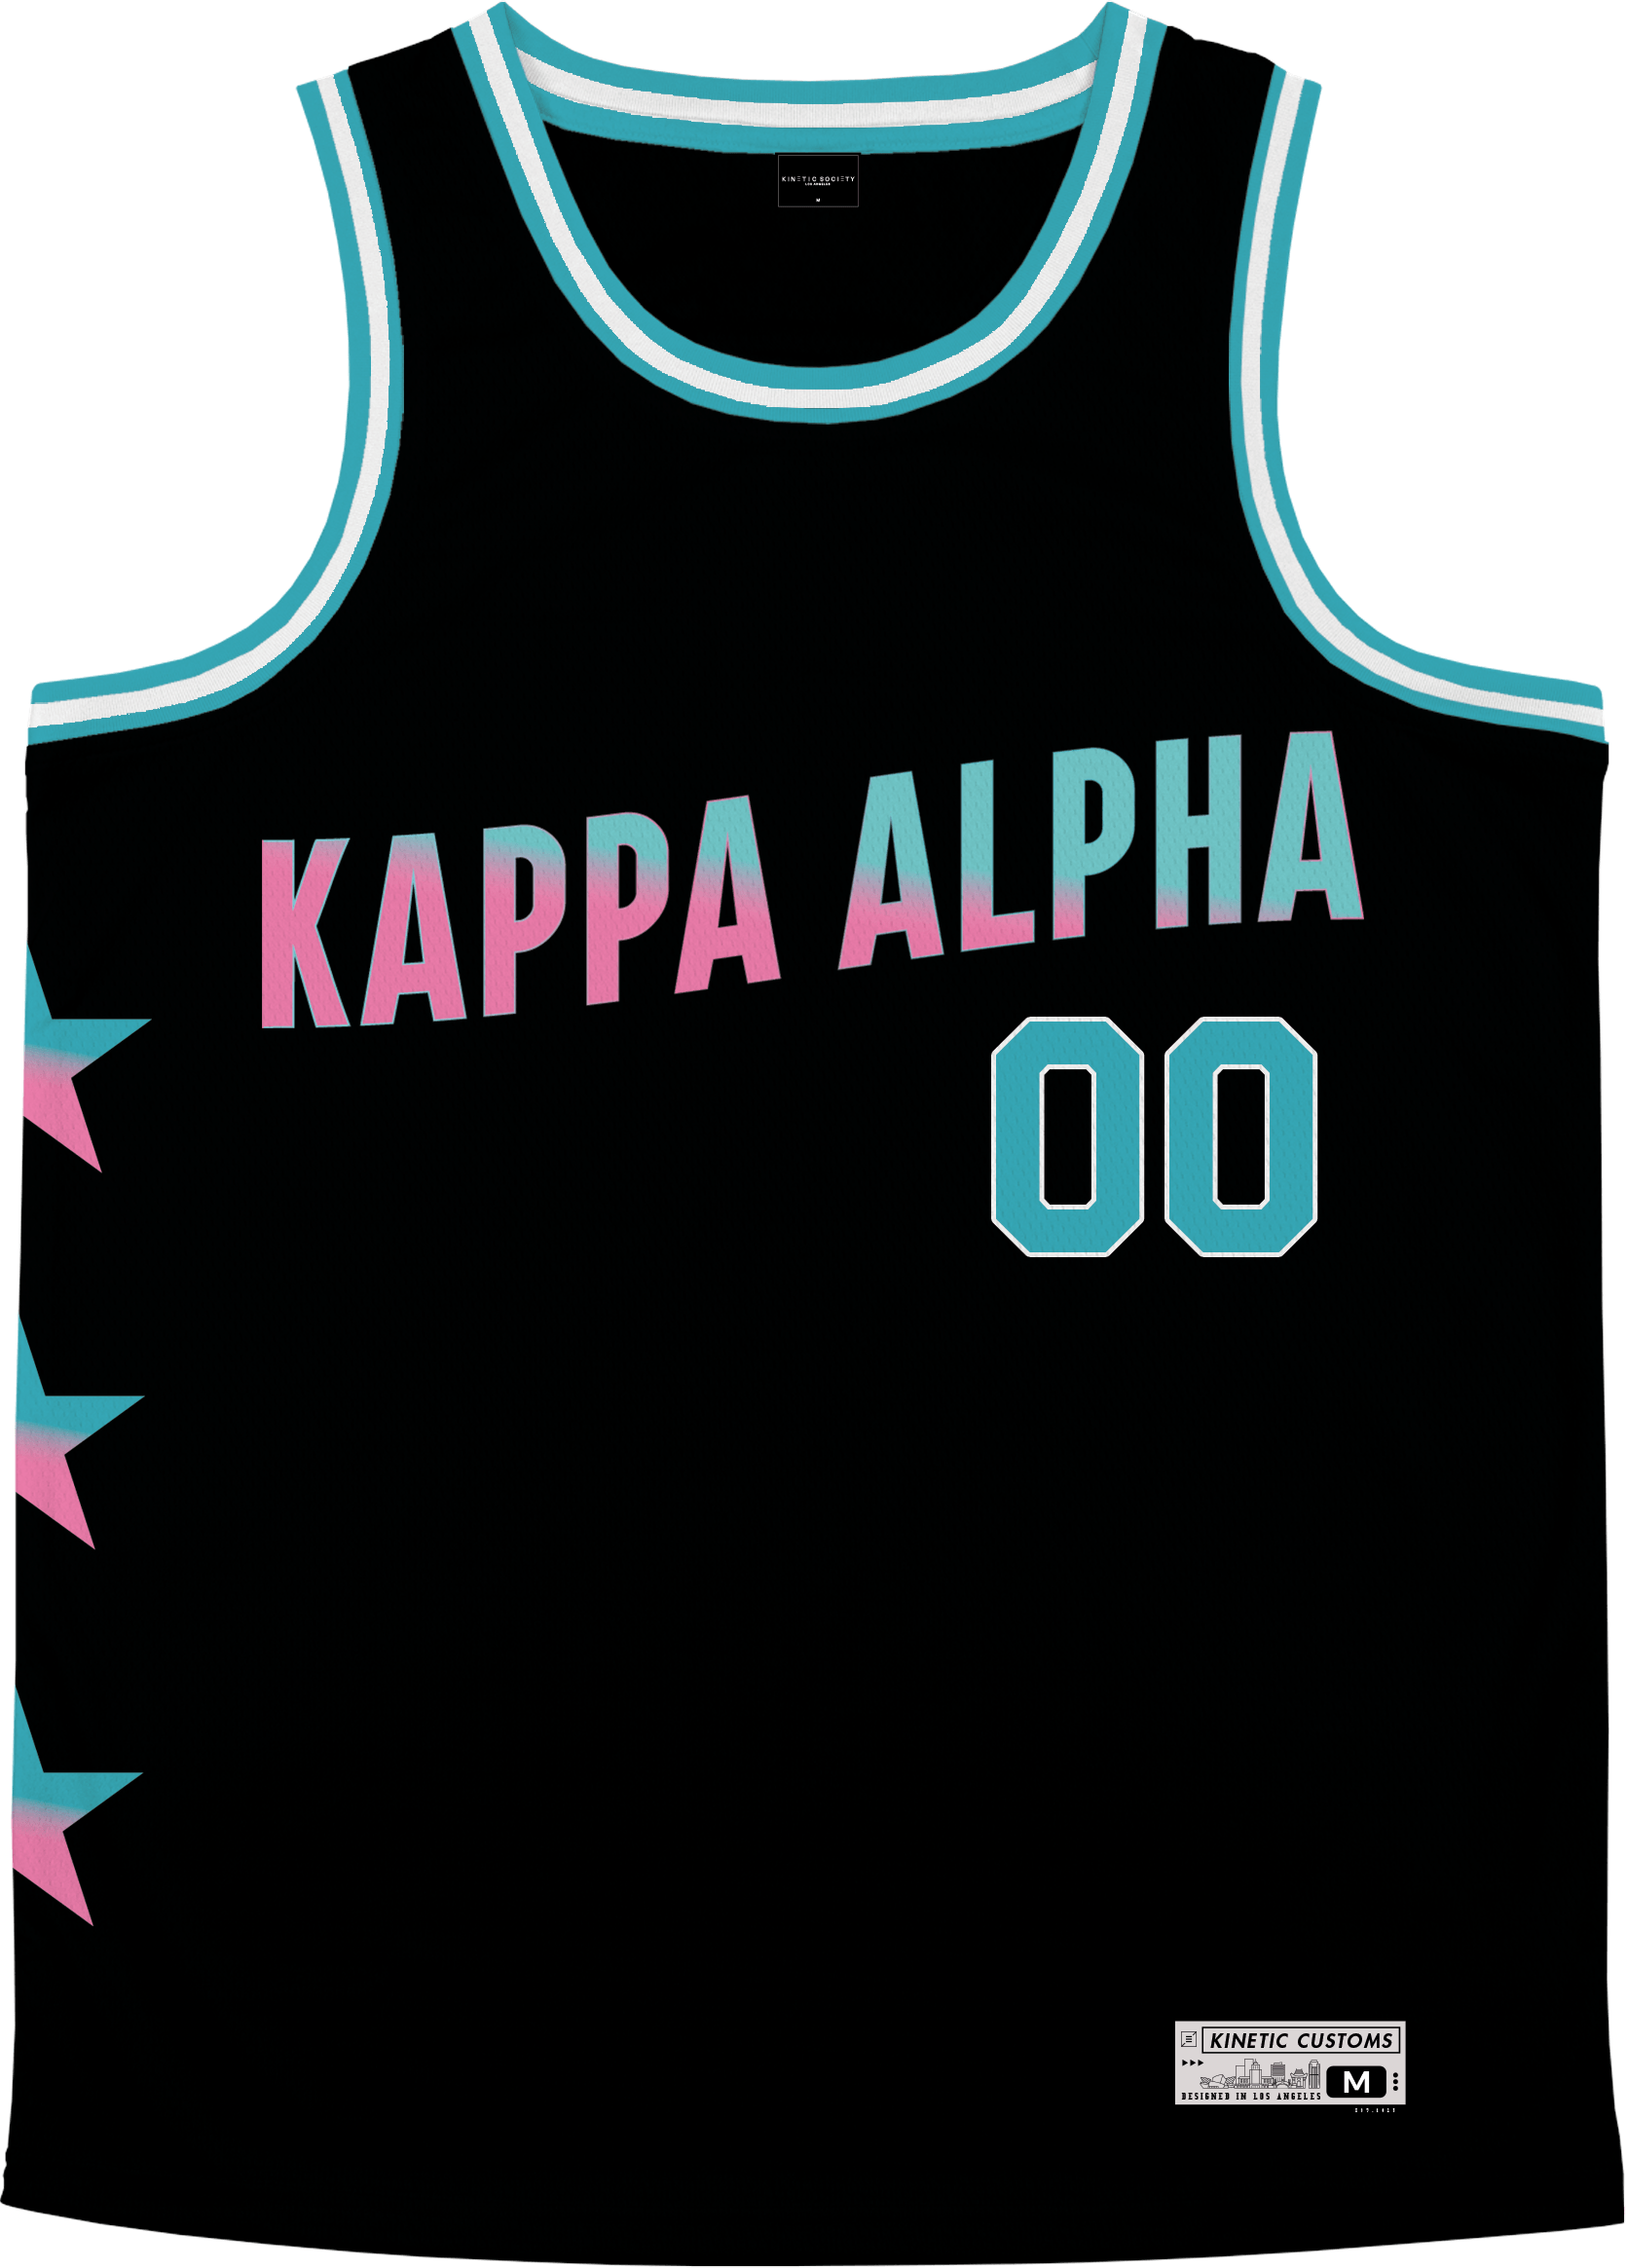 Kappa Alpha Order - Cotton Candy Basketball Jersey - Kinetic Society